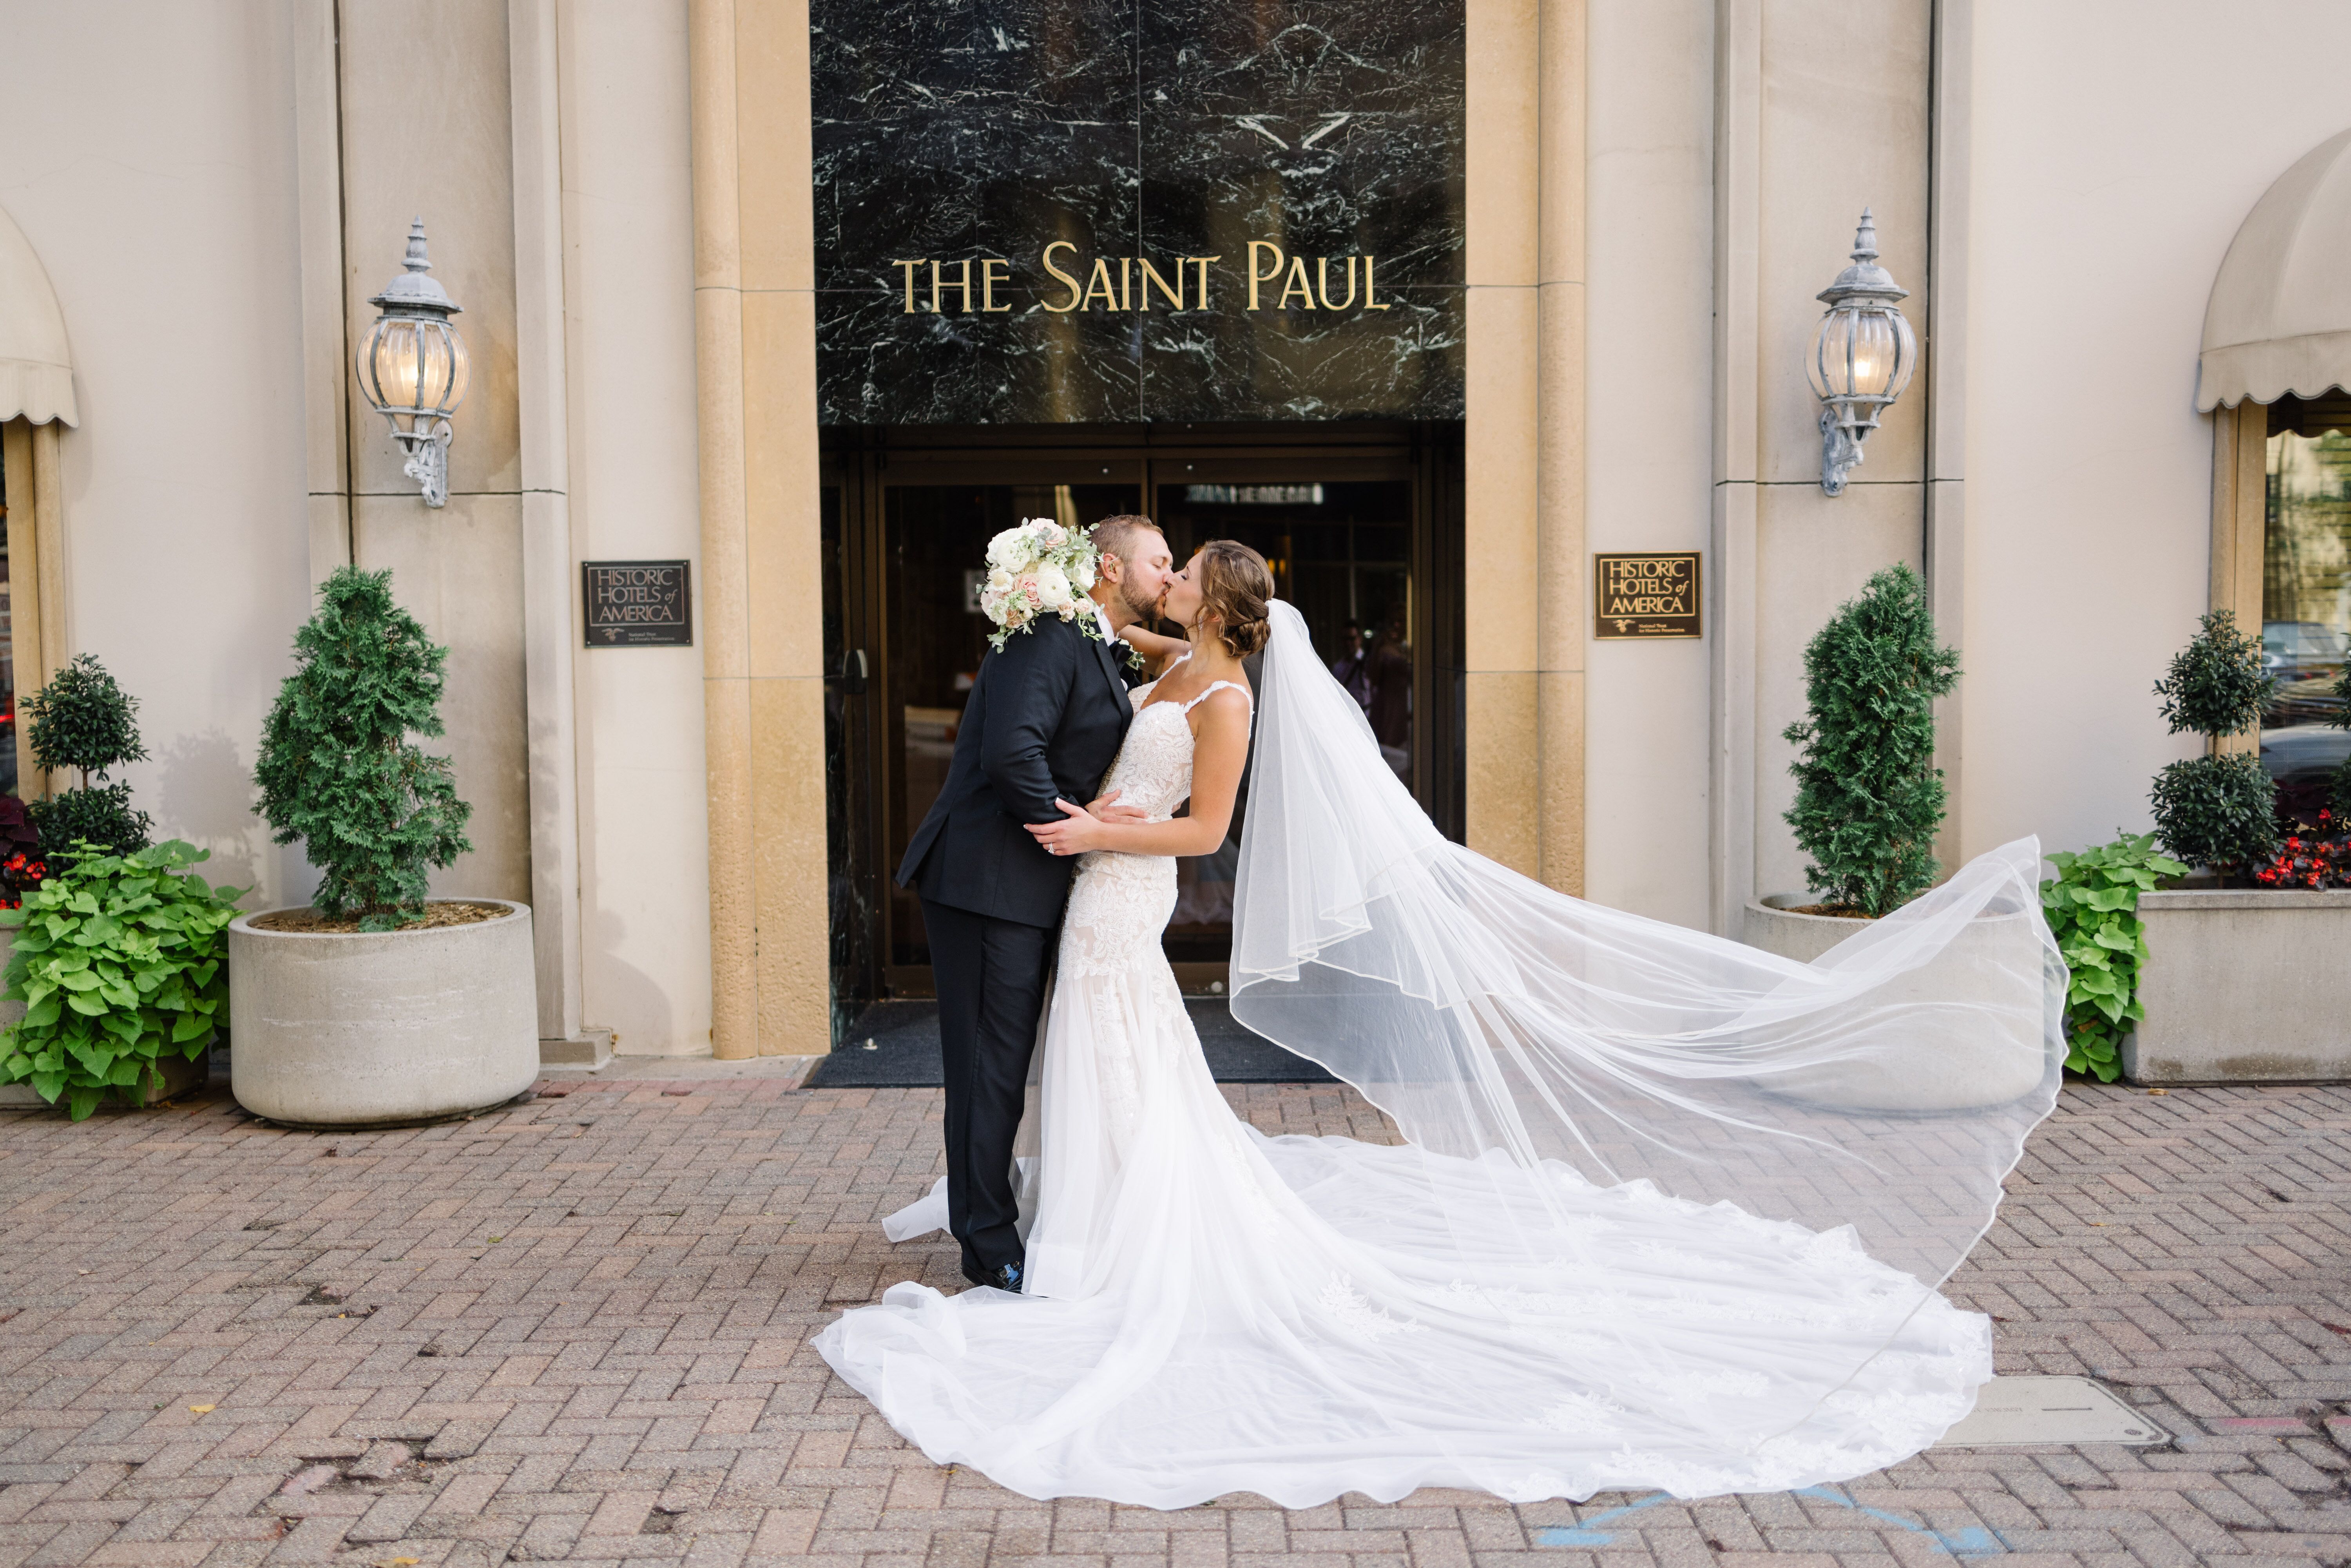 St. Paul Minnesota - Saint Paul Hotel - Historic Hotels of…